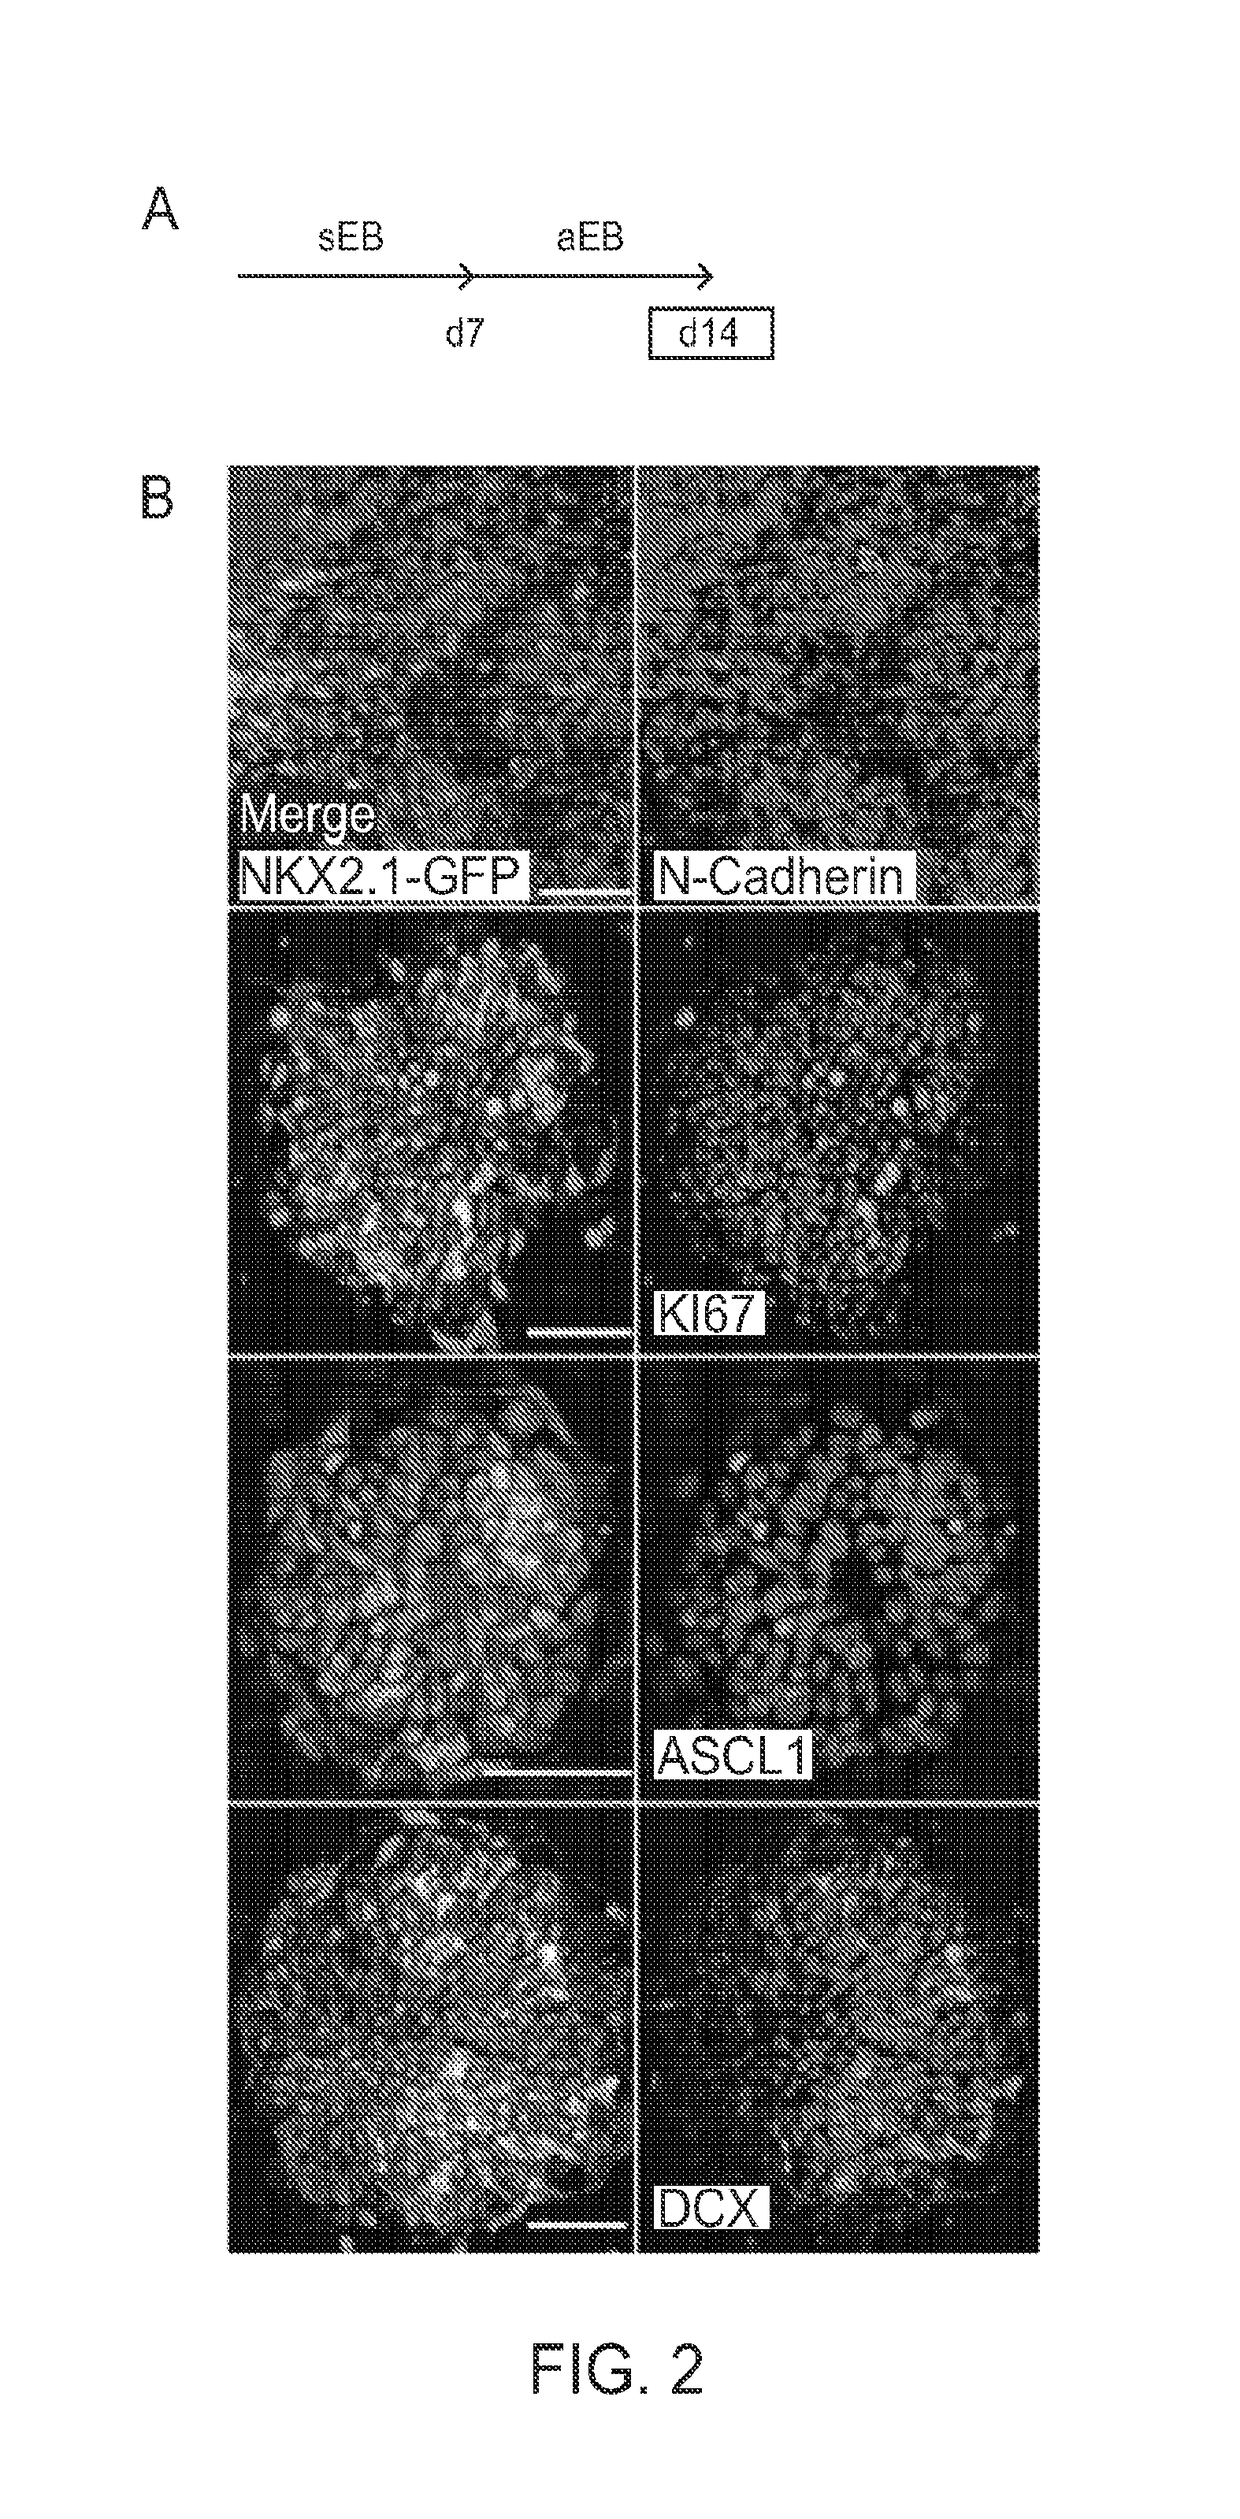 In vitro production of medial ganglionic eminence precursor cells